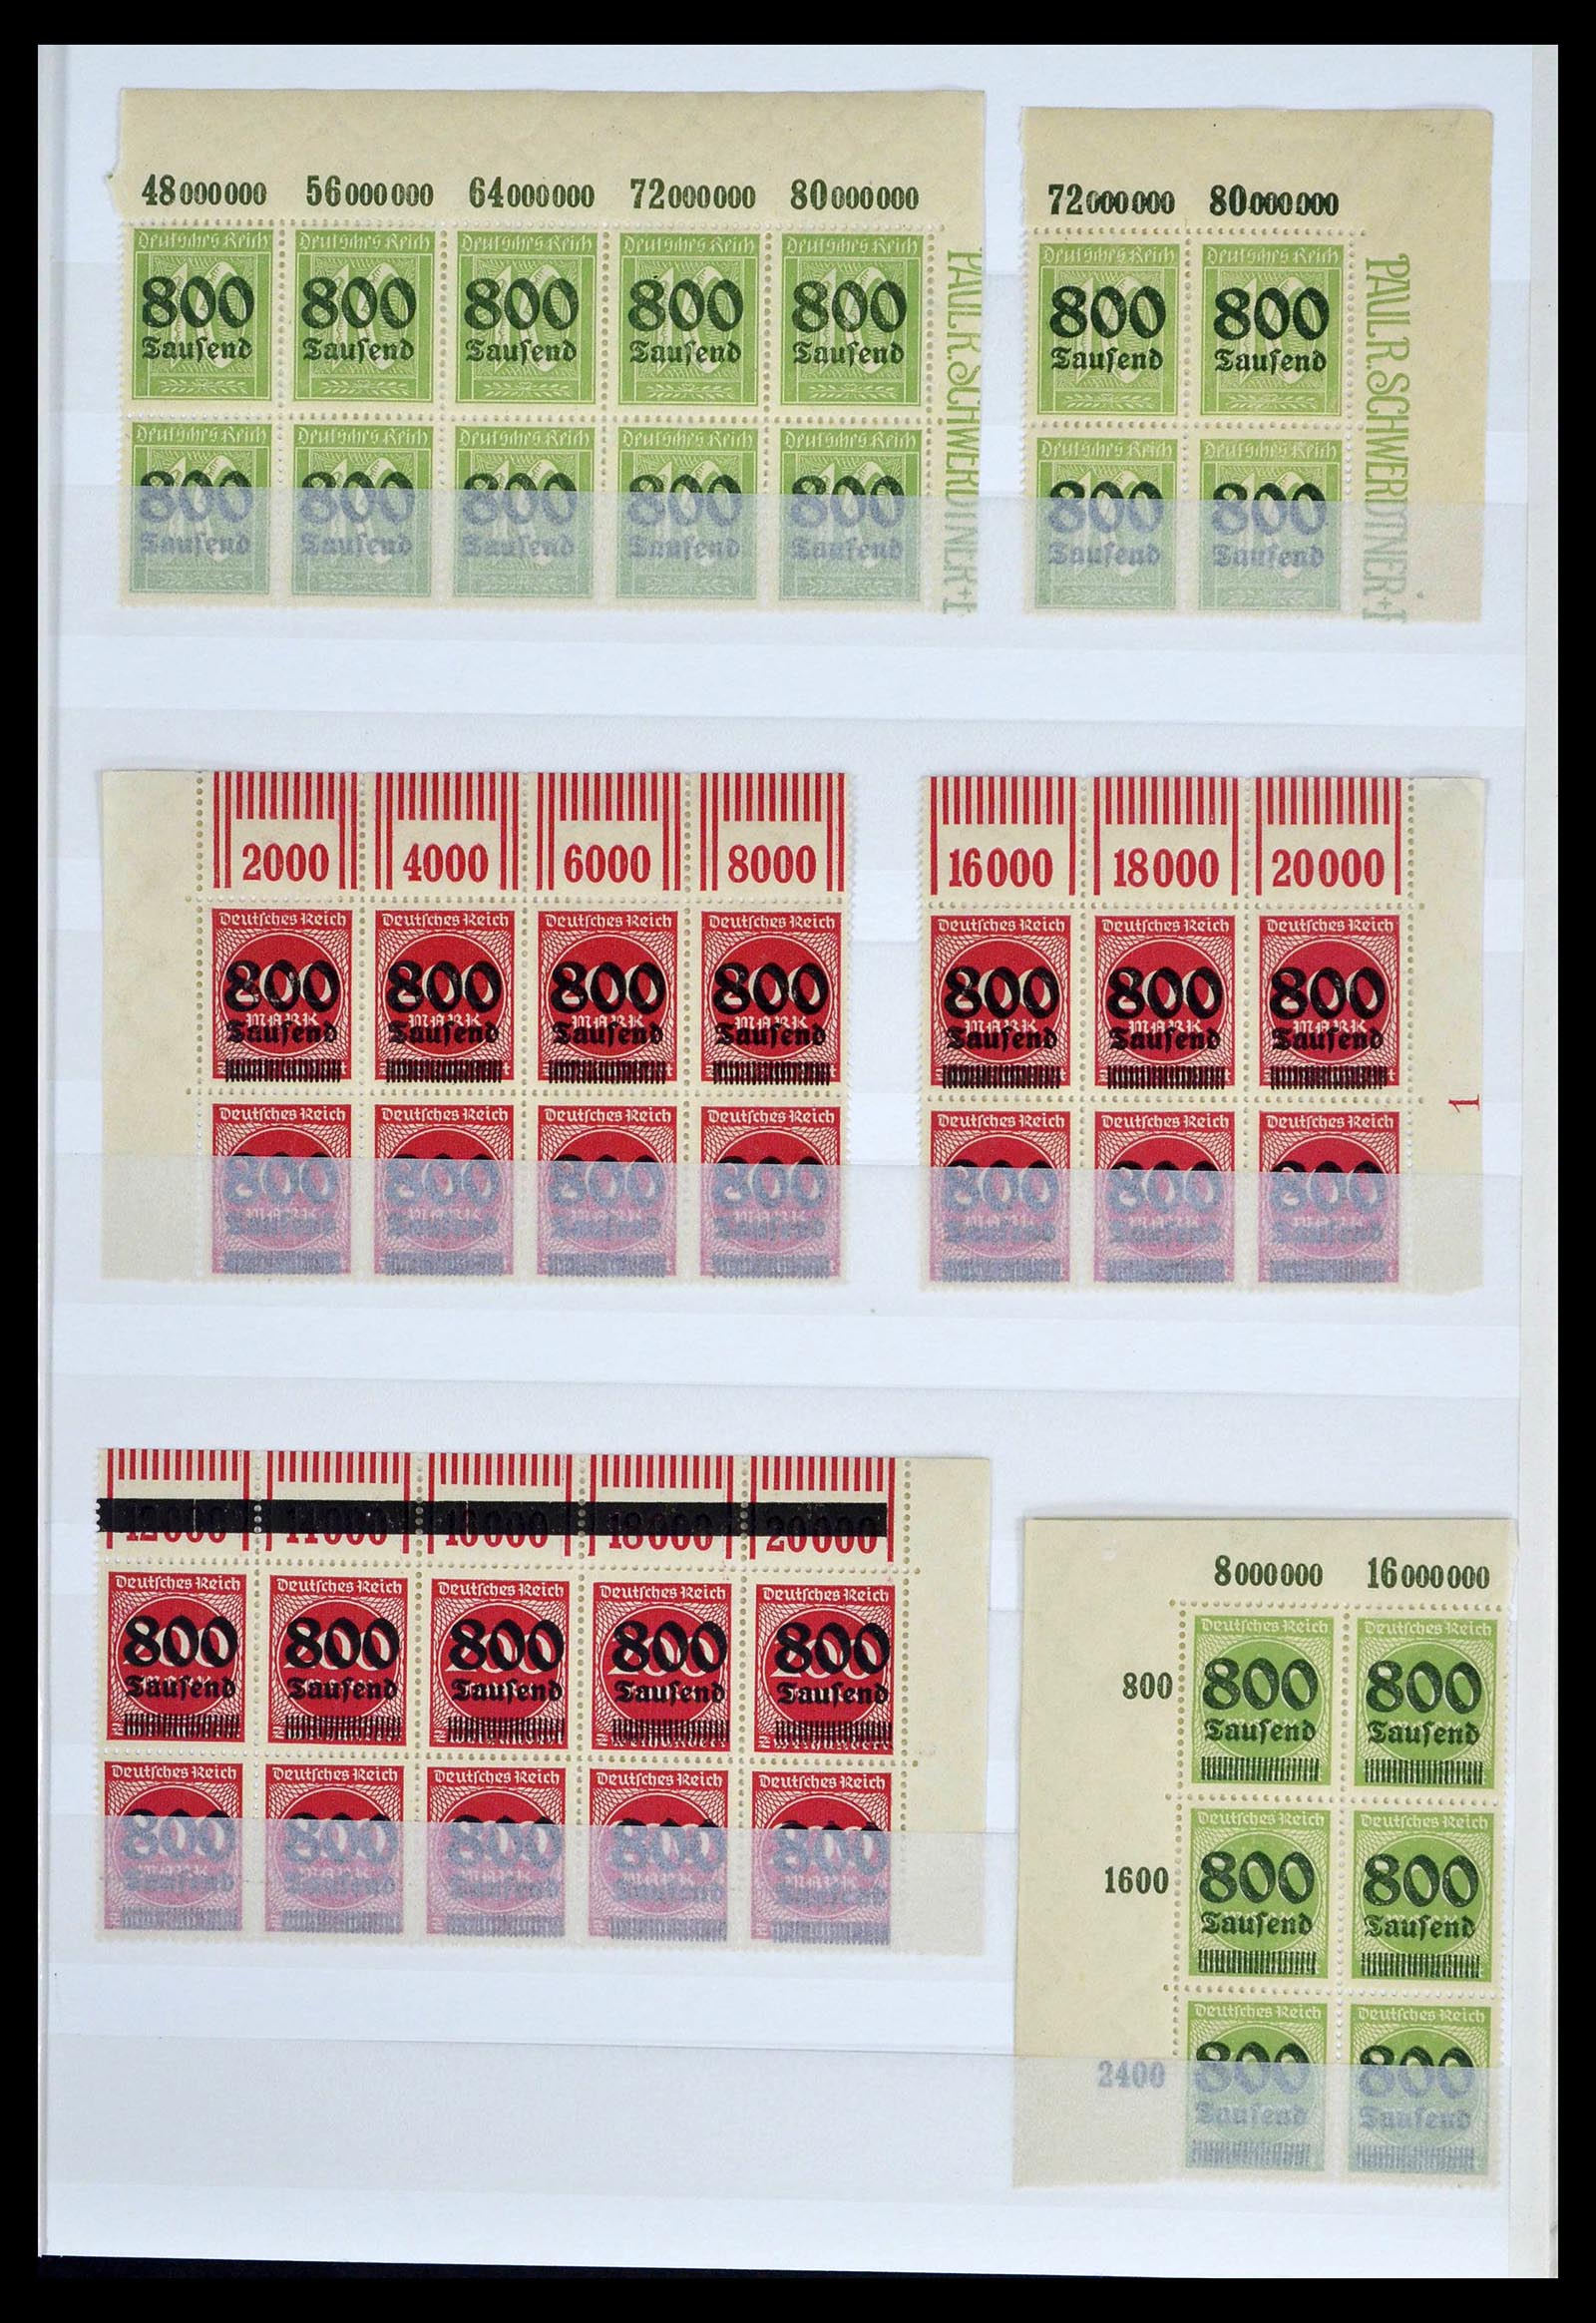 39254 0057 - Stamp collection 39254 German Reich MNH top margins.